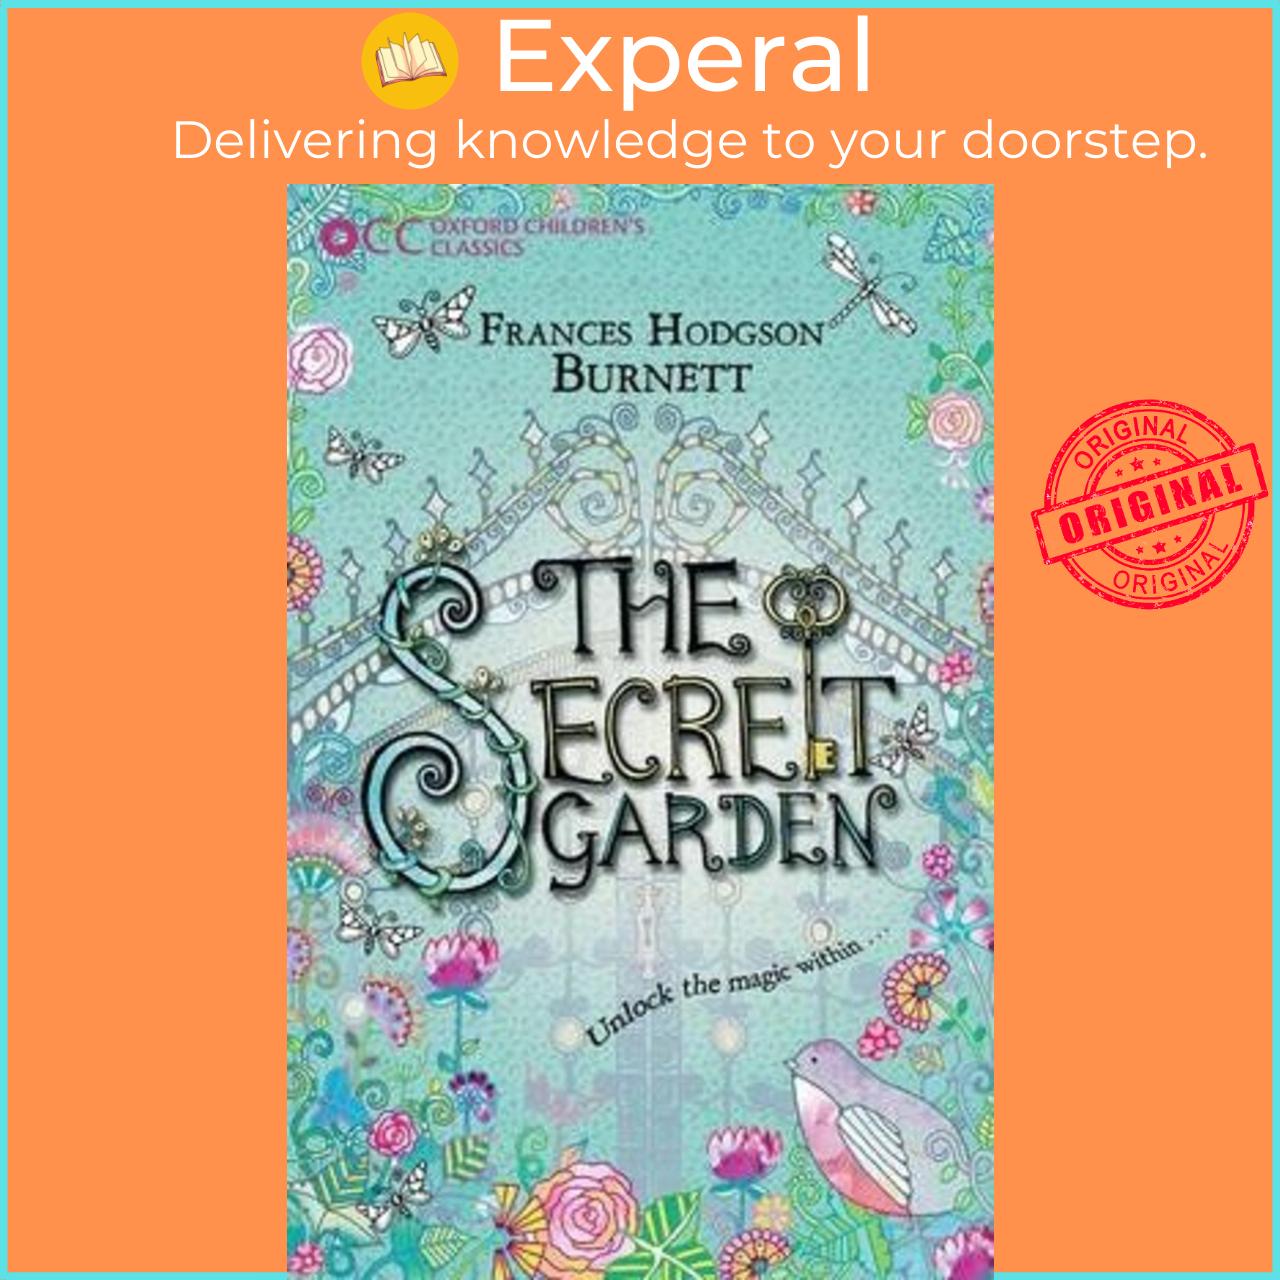 Sách - Oxford Children's Classics: The Secret Garden by Frances Hodgson Burnett (UK edition, paperback)